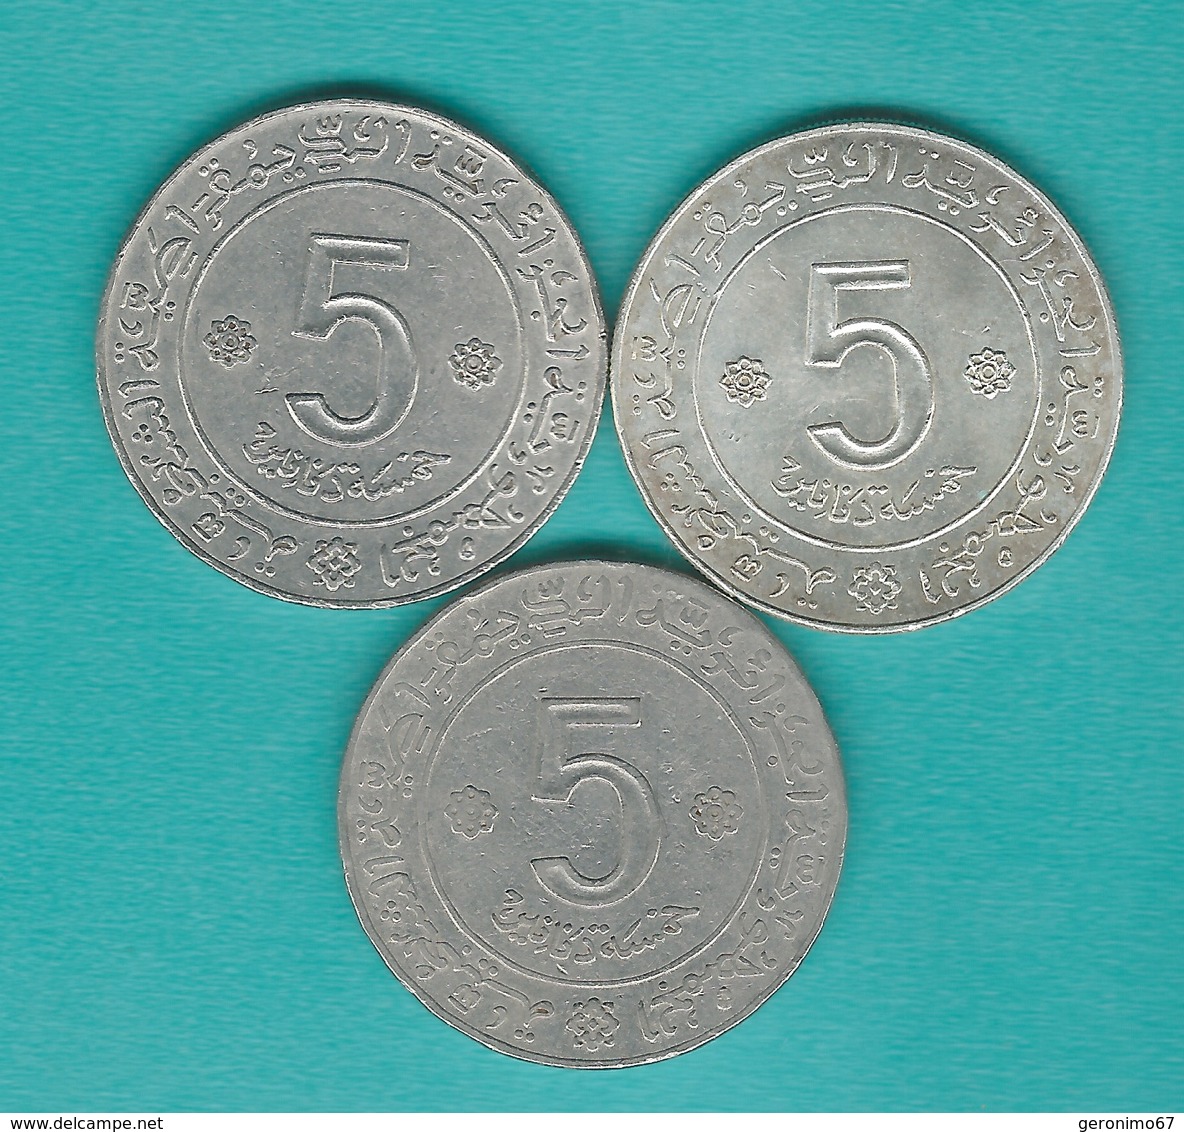 5 Dinars - 1972 - KM105, KM105a.1 & KM105a.2 - Angola